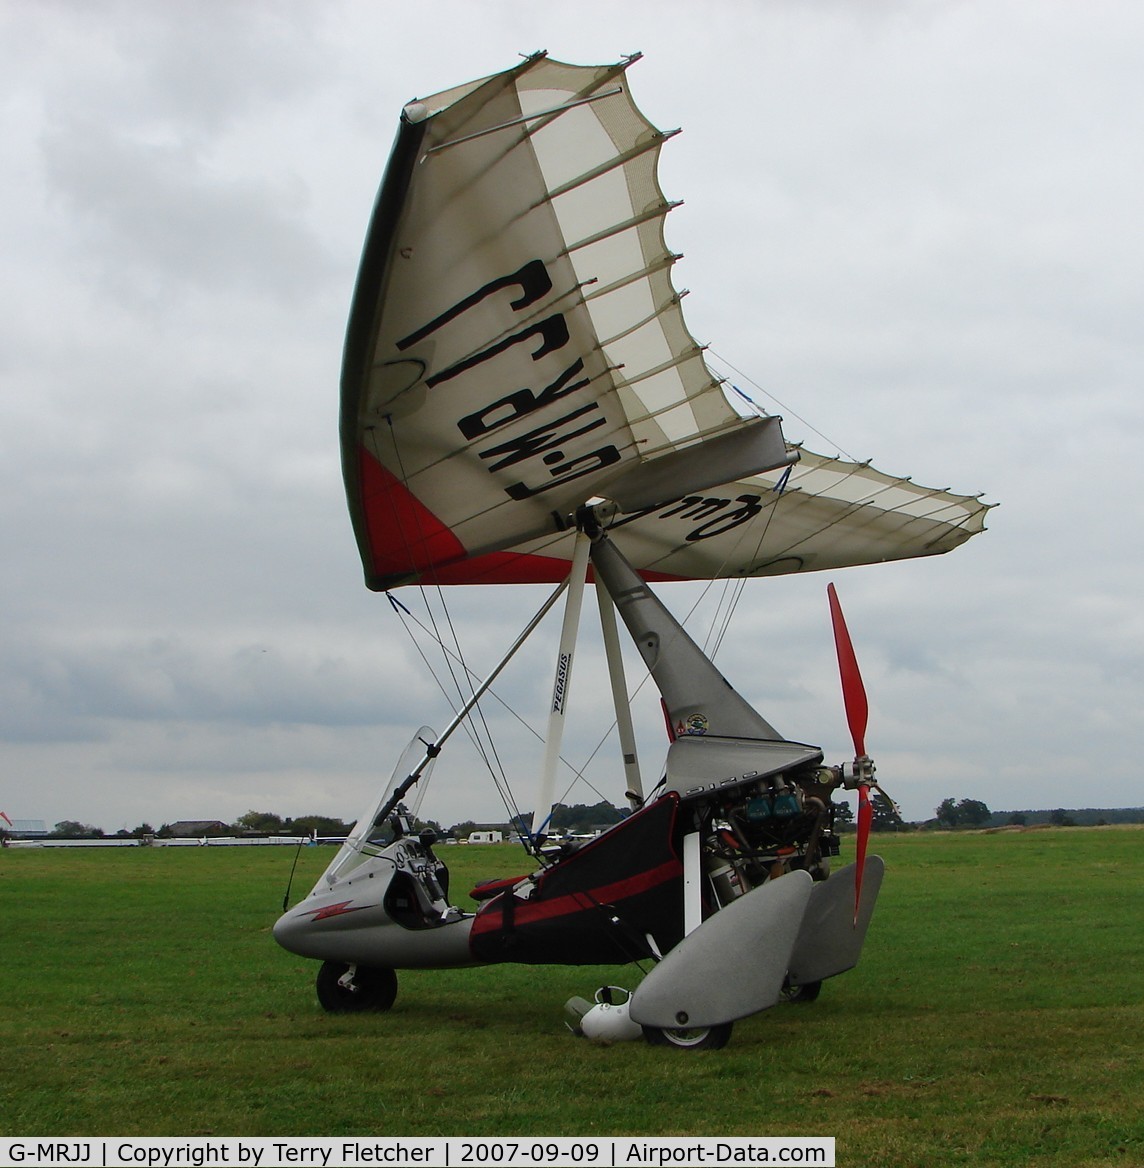 G-MRJJ, 2003 Mainair Pegasus Quik C/N 7940, Otherton Microlight Fly-in Staffordshire , UK